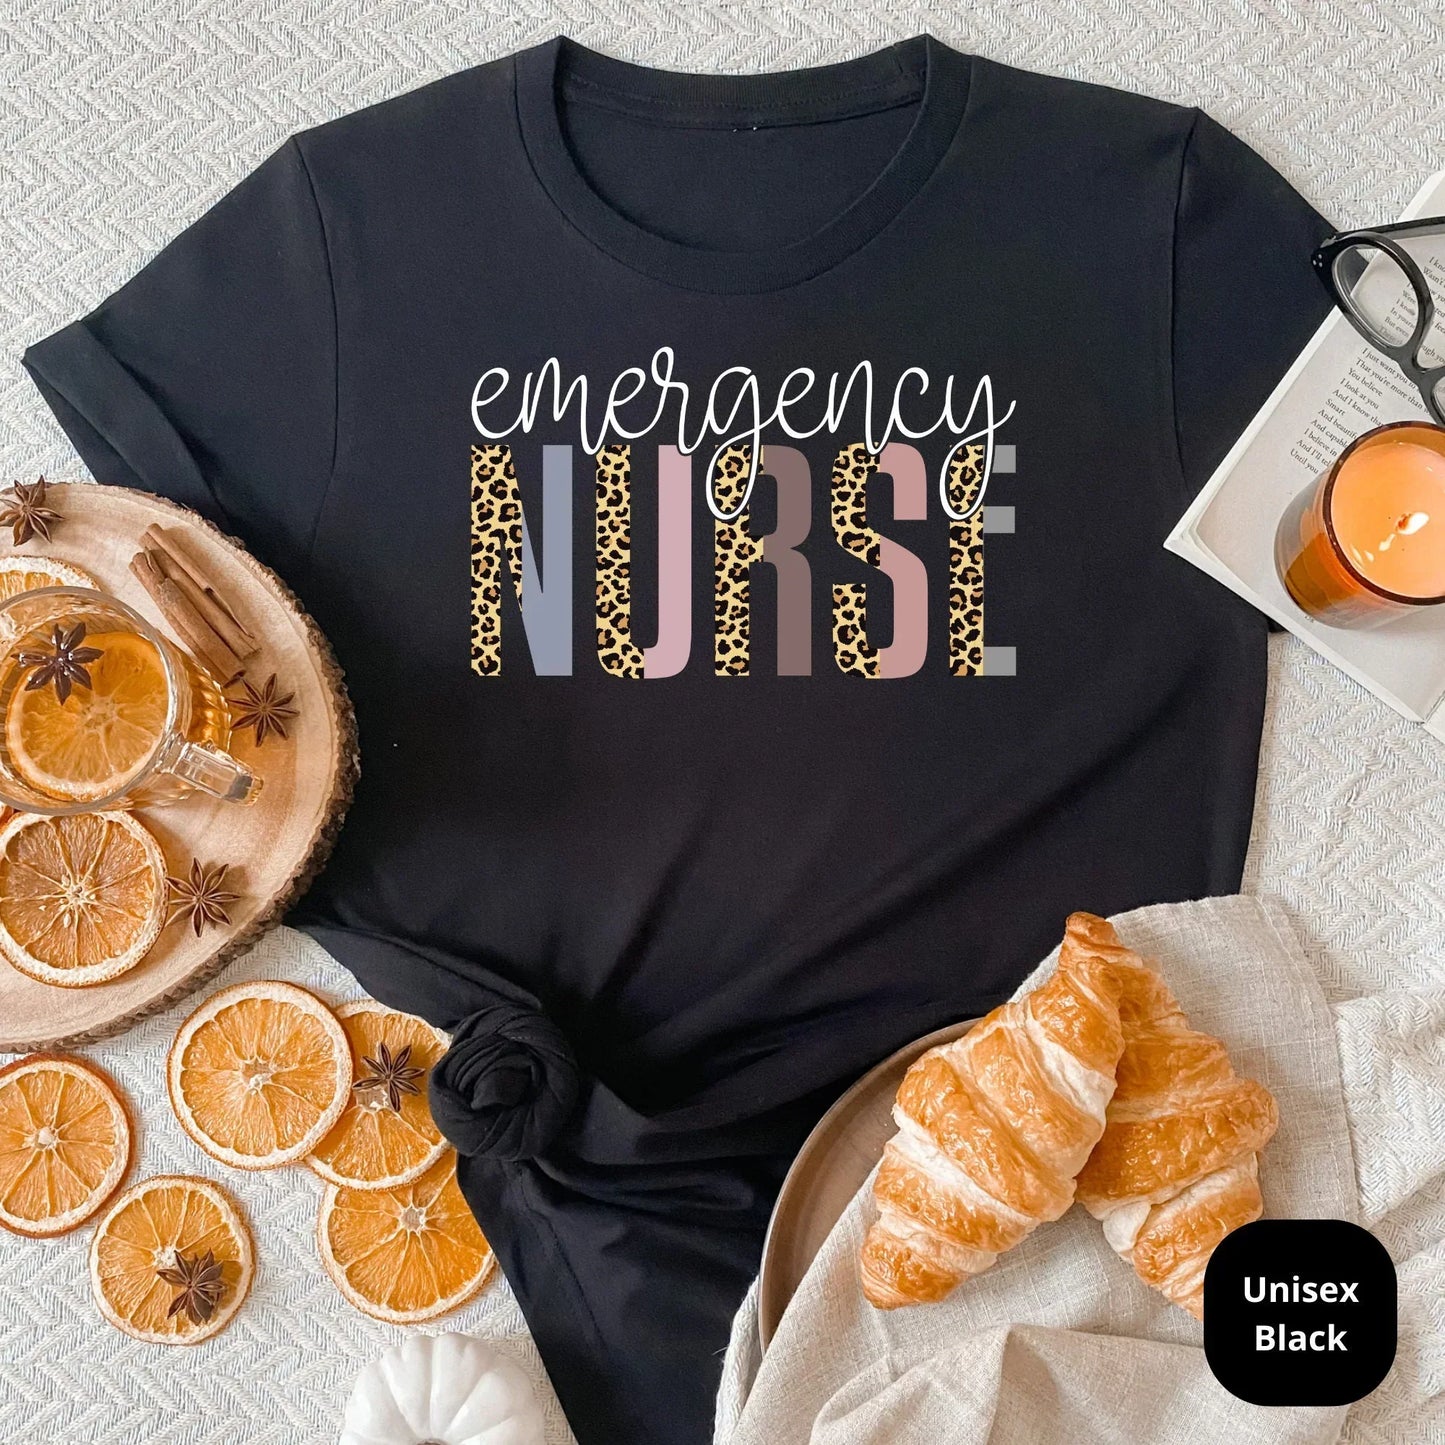 Emergency Nurse Shirt | Nurse Gift for Nurse Graduation, Nurse Week, Future Nurse Practitioner, New Grad Student, Nurse Appreciation Week